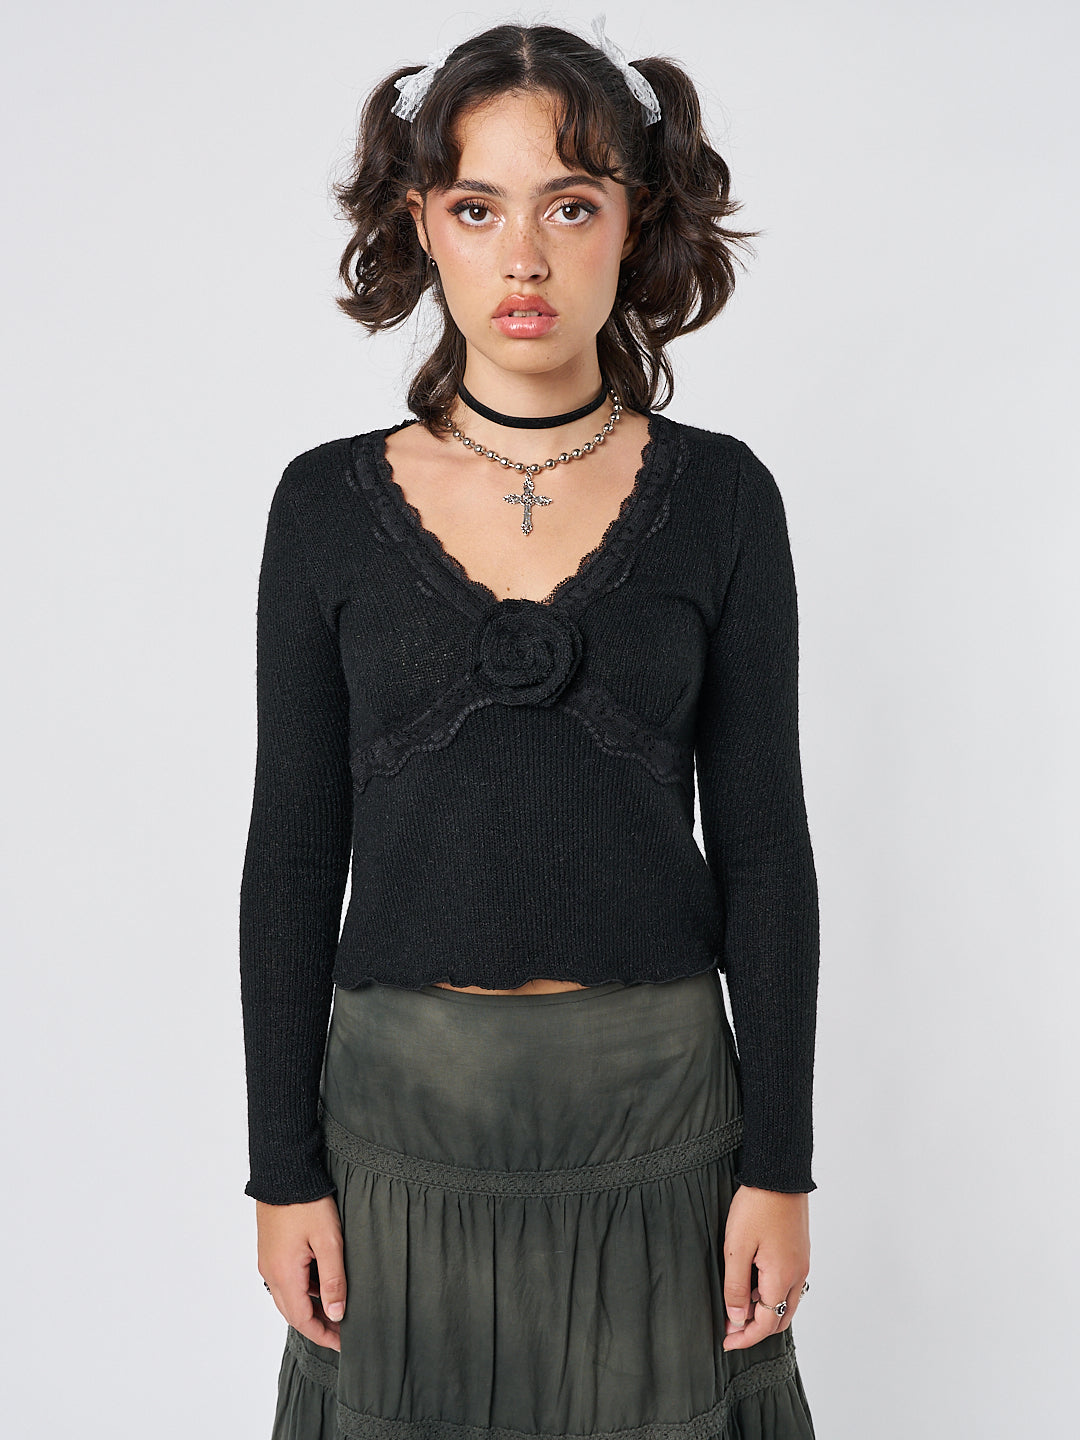 Ida Rose Black Knitted Top